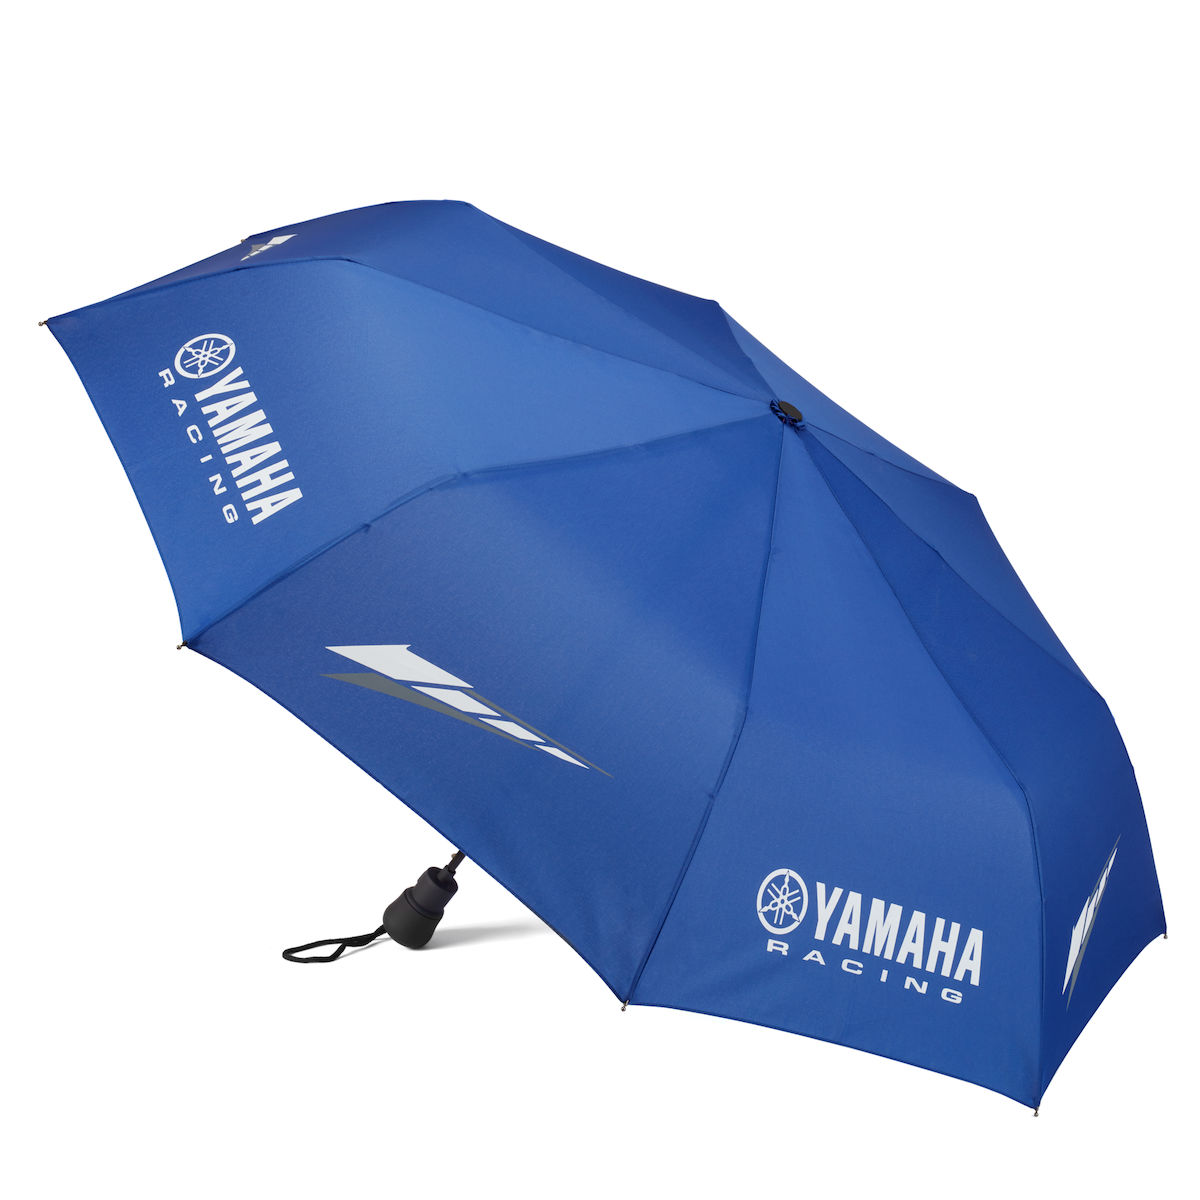 Yamaha Paraplu | MotorCentrumWest